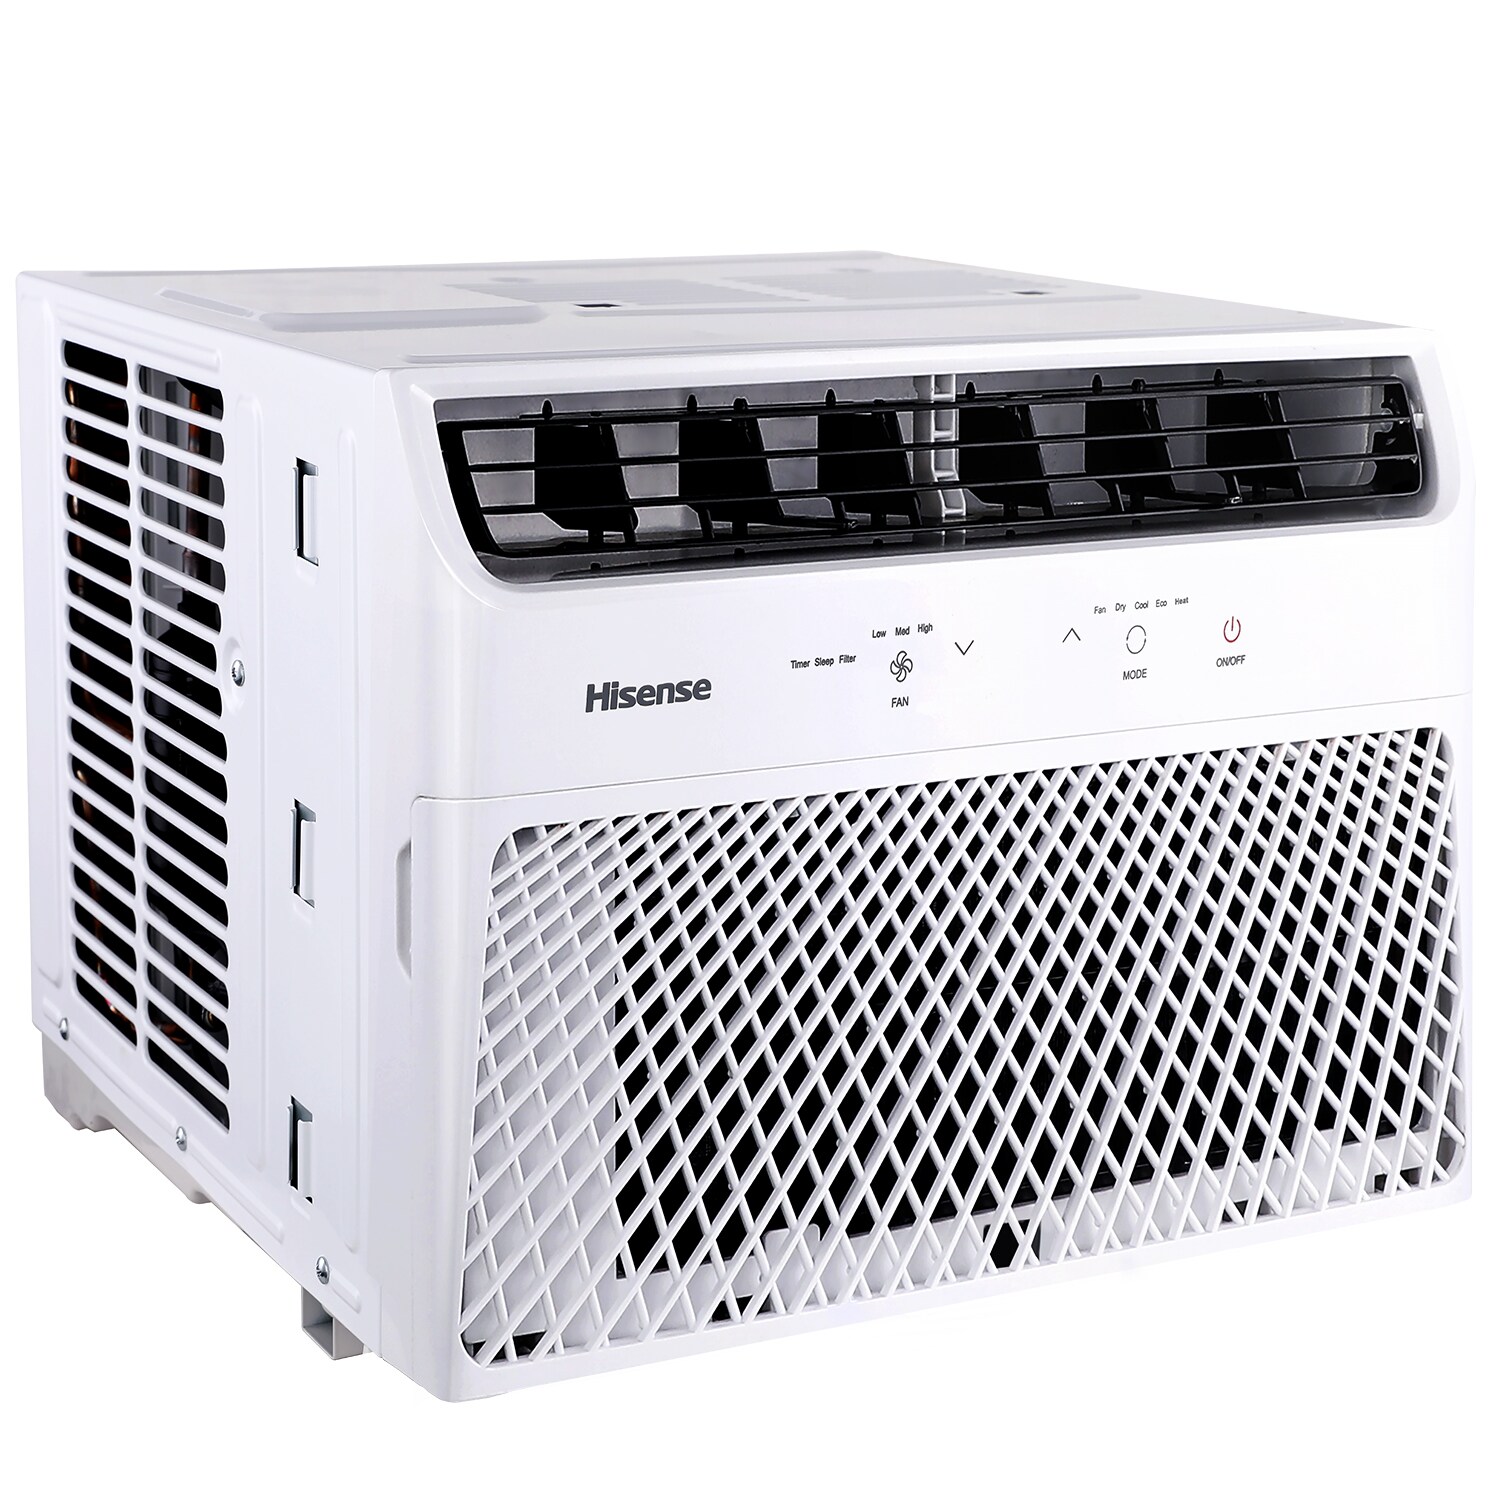 Hisense 350 Sq Ft Window Air Conditioner With Heater 115 Volt 7500 Btu In The Window Air 1010